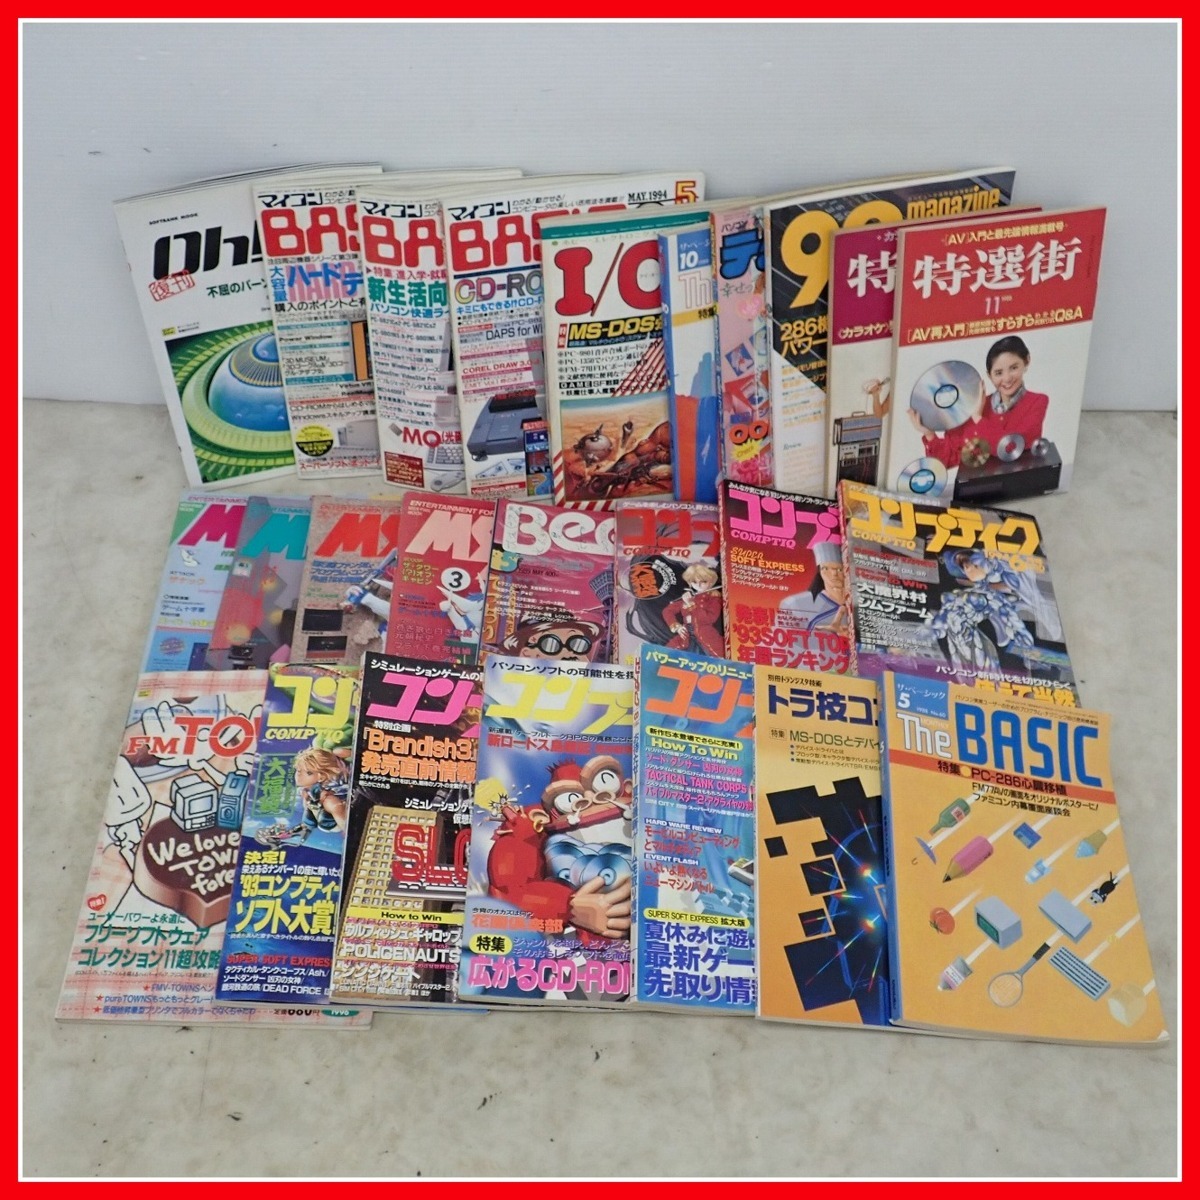 * monthly comp tea k/MSX FAN/ Techno Police / microcomputer BASIC etc. computer / retro game magazine together large amount set [40